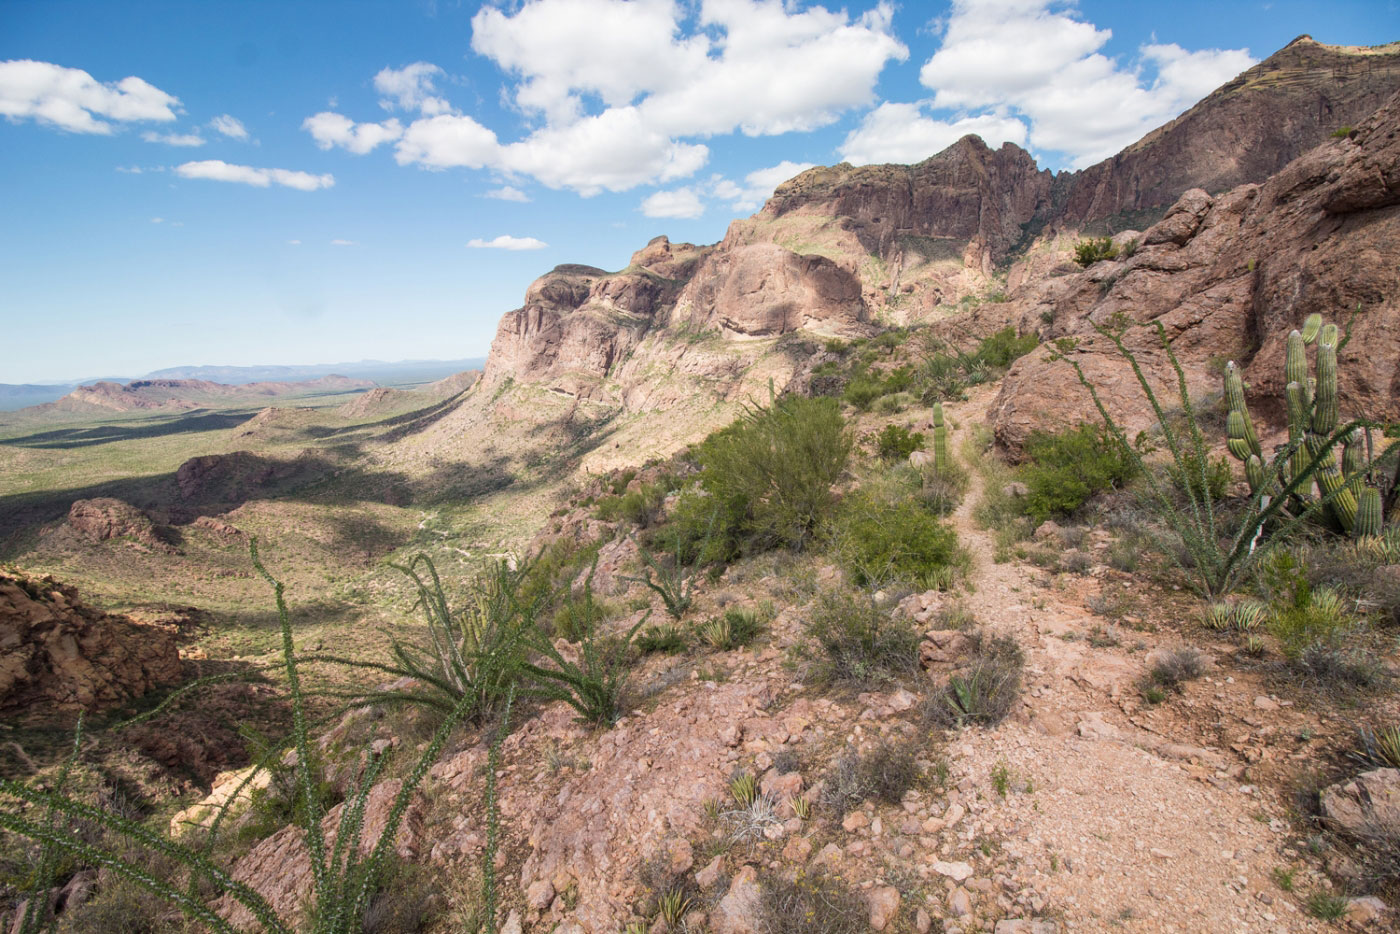 Hike Mount Ajo via Bull Pasture Trail in Organ Pipe Cactus National Monument, Arizona - Stav is Lost